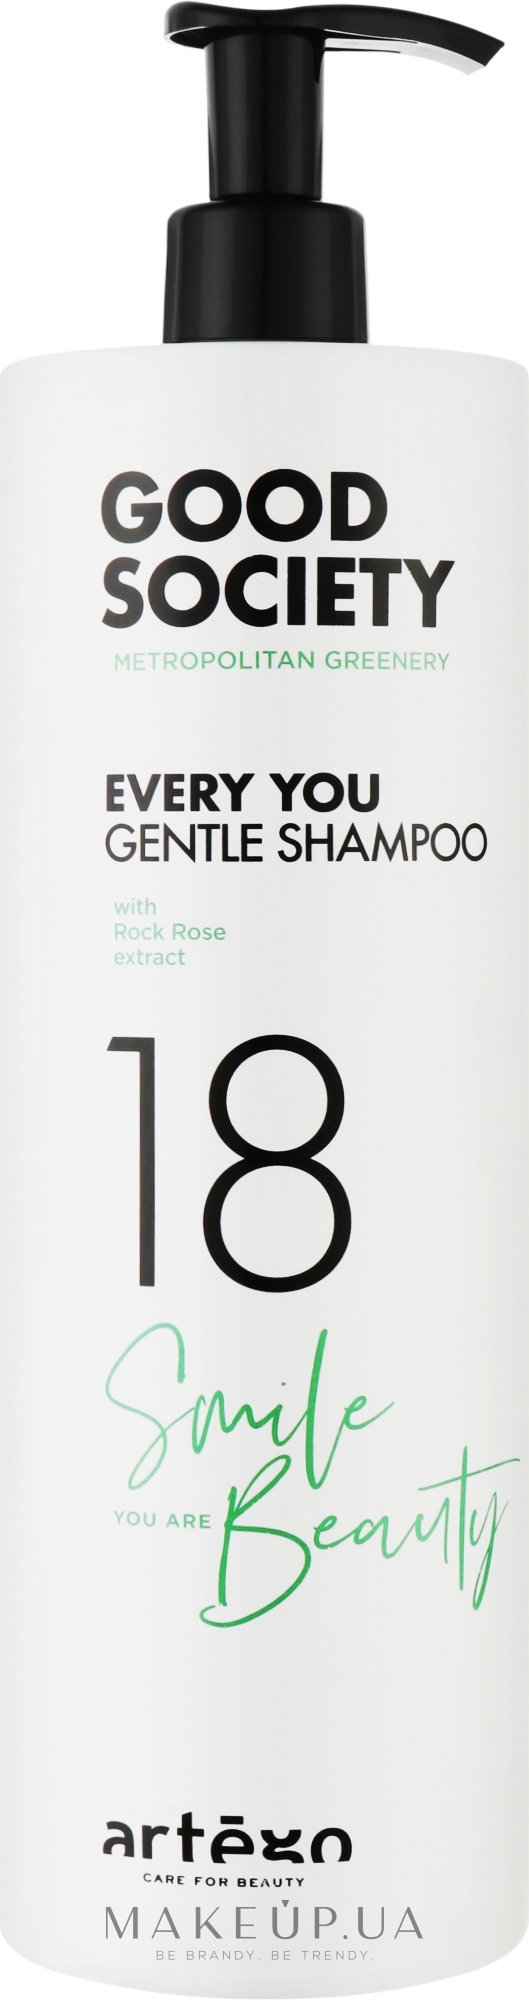 Шампунь для волос - Artego Good Society Every You 18 Shampoo — фото 1000ml